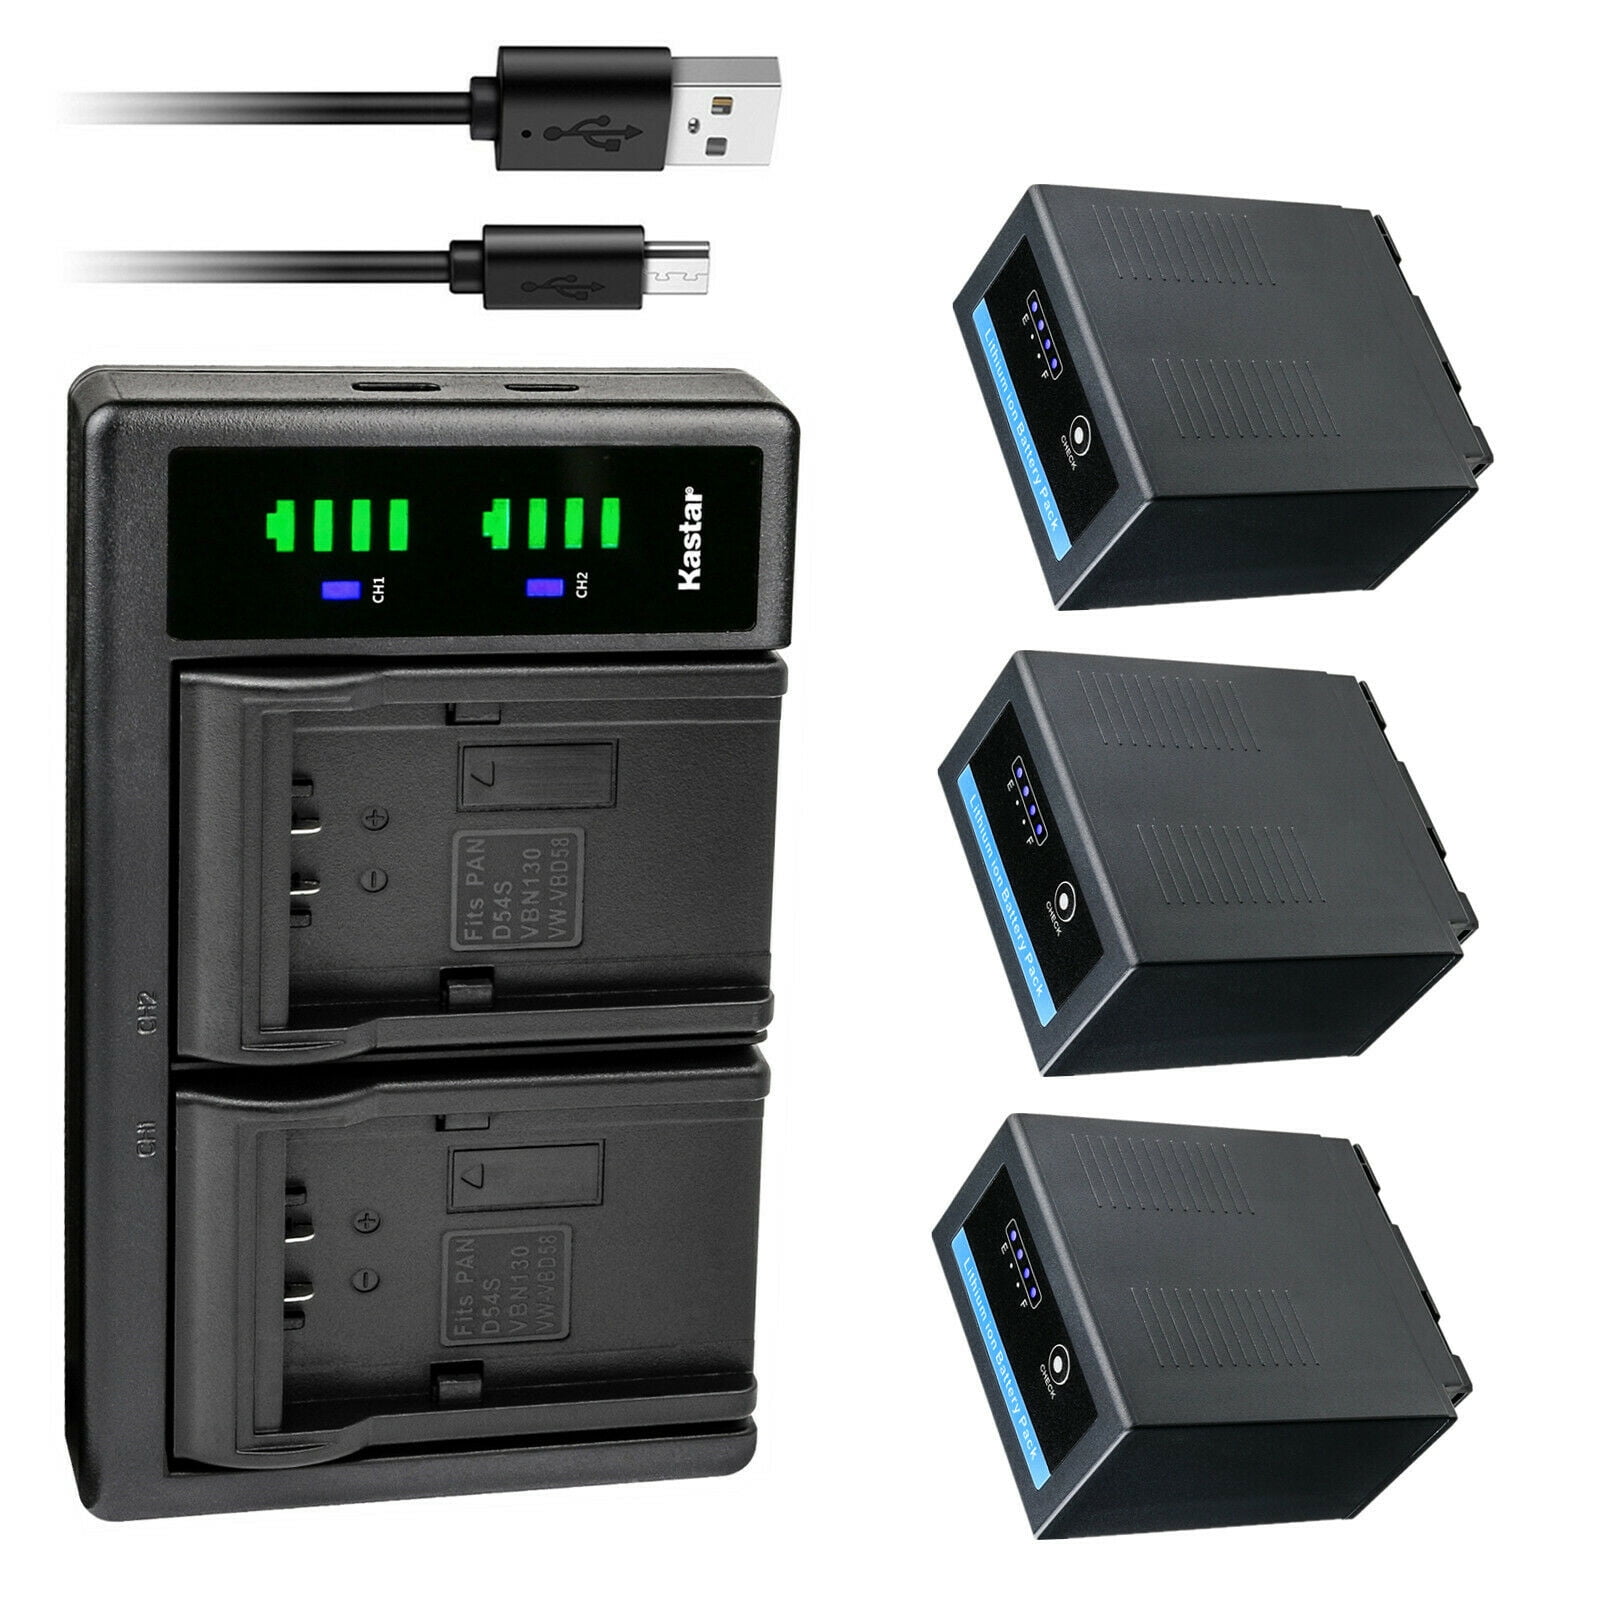 LEAD FOR PC AND MAC PANASONIC  AG-HVX200,AG-HVX200A CAMERA USB DATA SYNC CABLE 